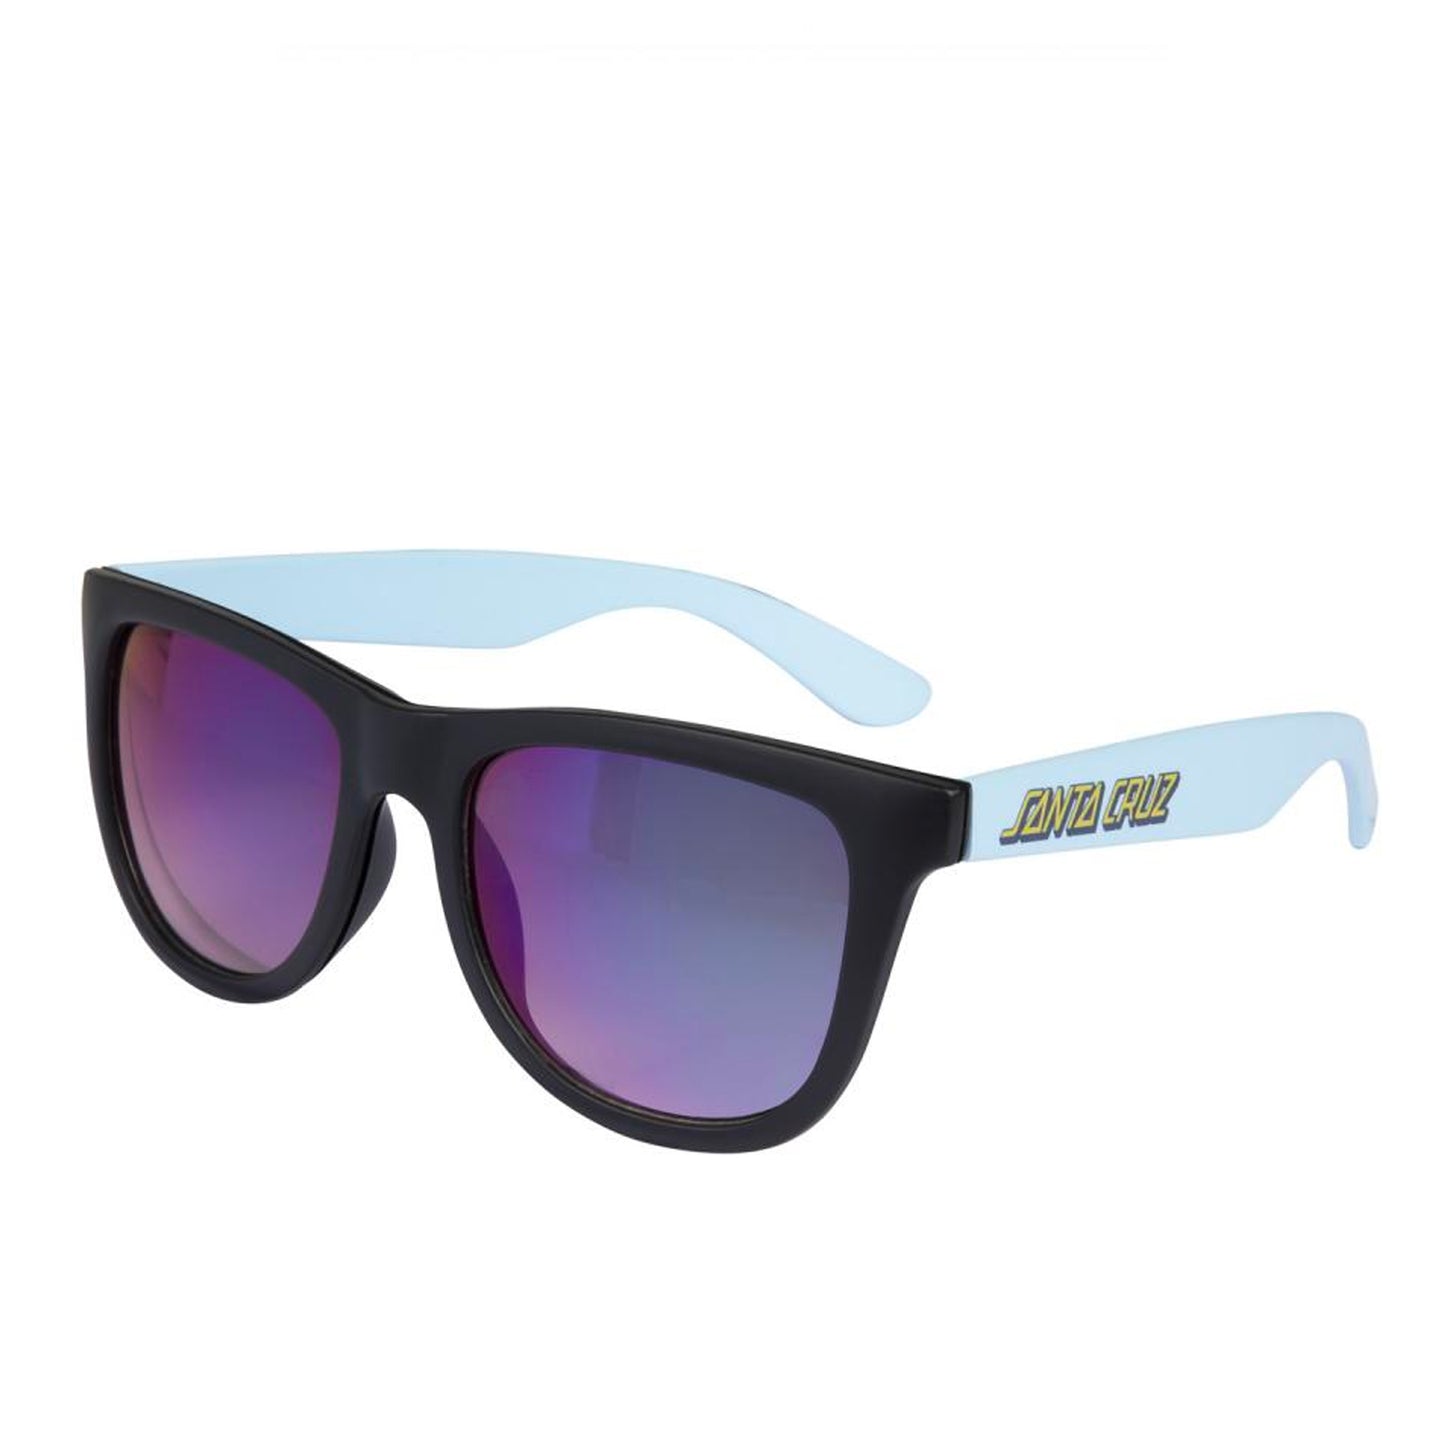 Santa Cruz Inferno Strip Sunglasses - Black / Light Blue - Prime Delux Store